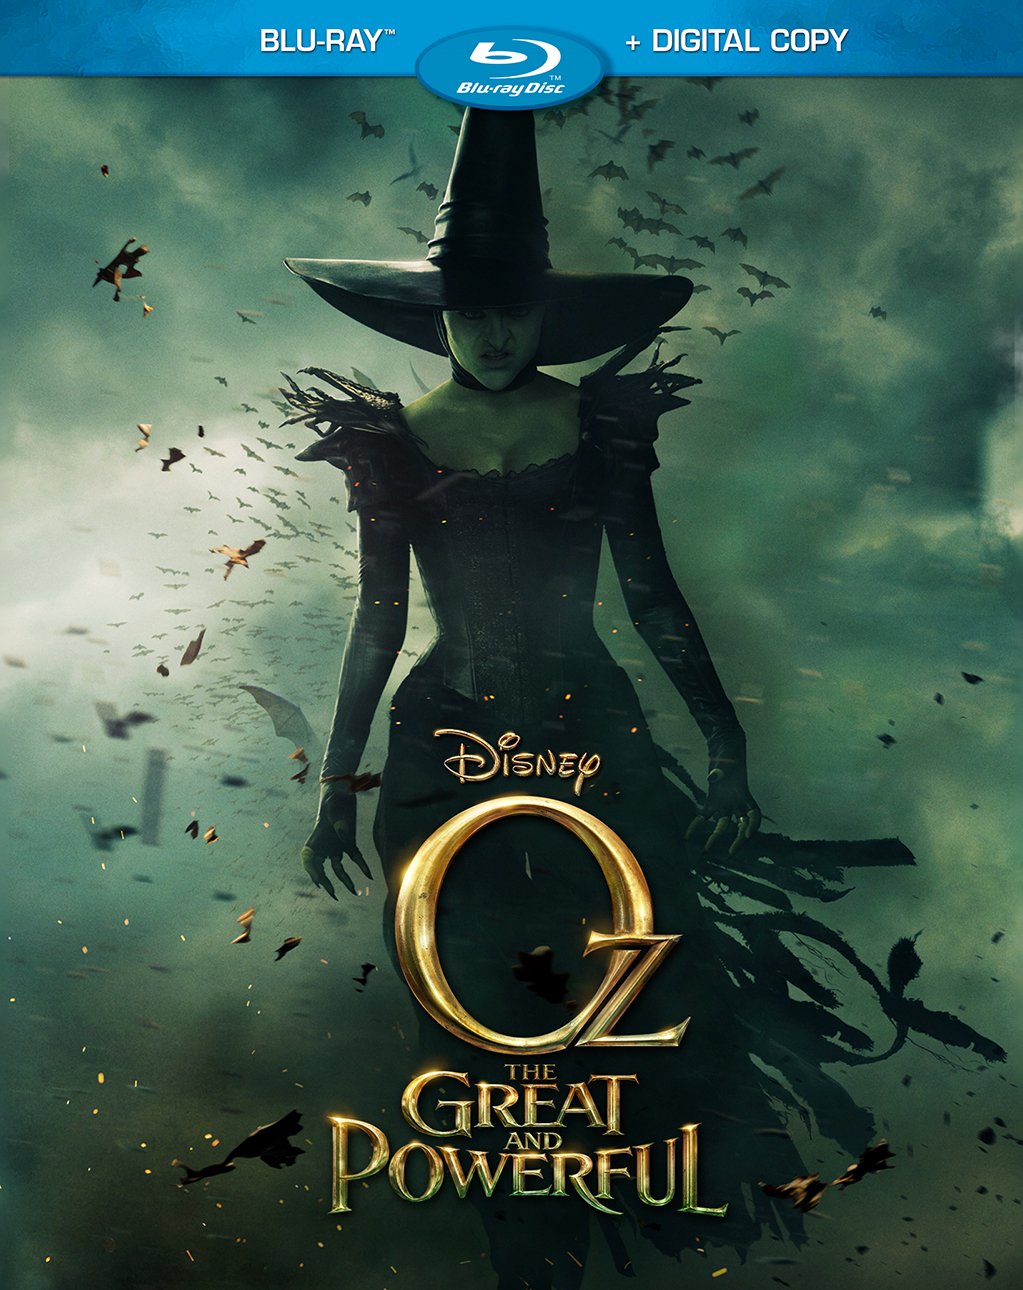 Oz the Great and Powerful (2013) - IMDb